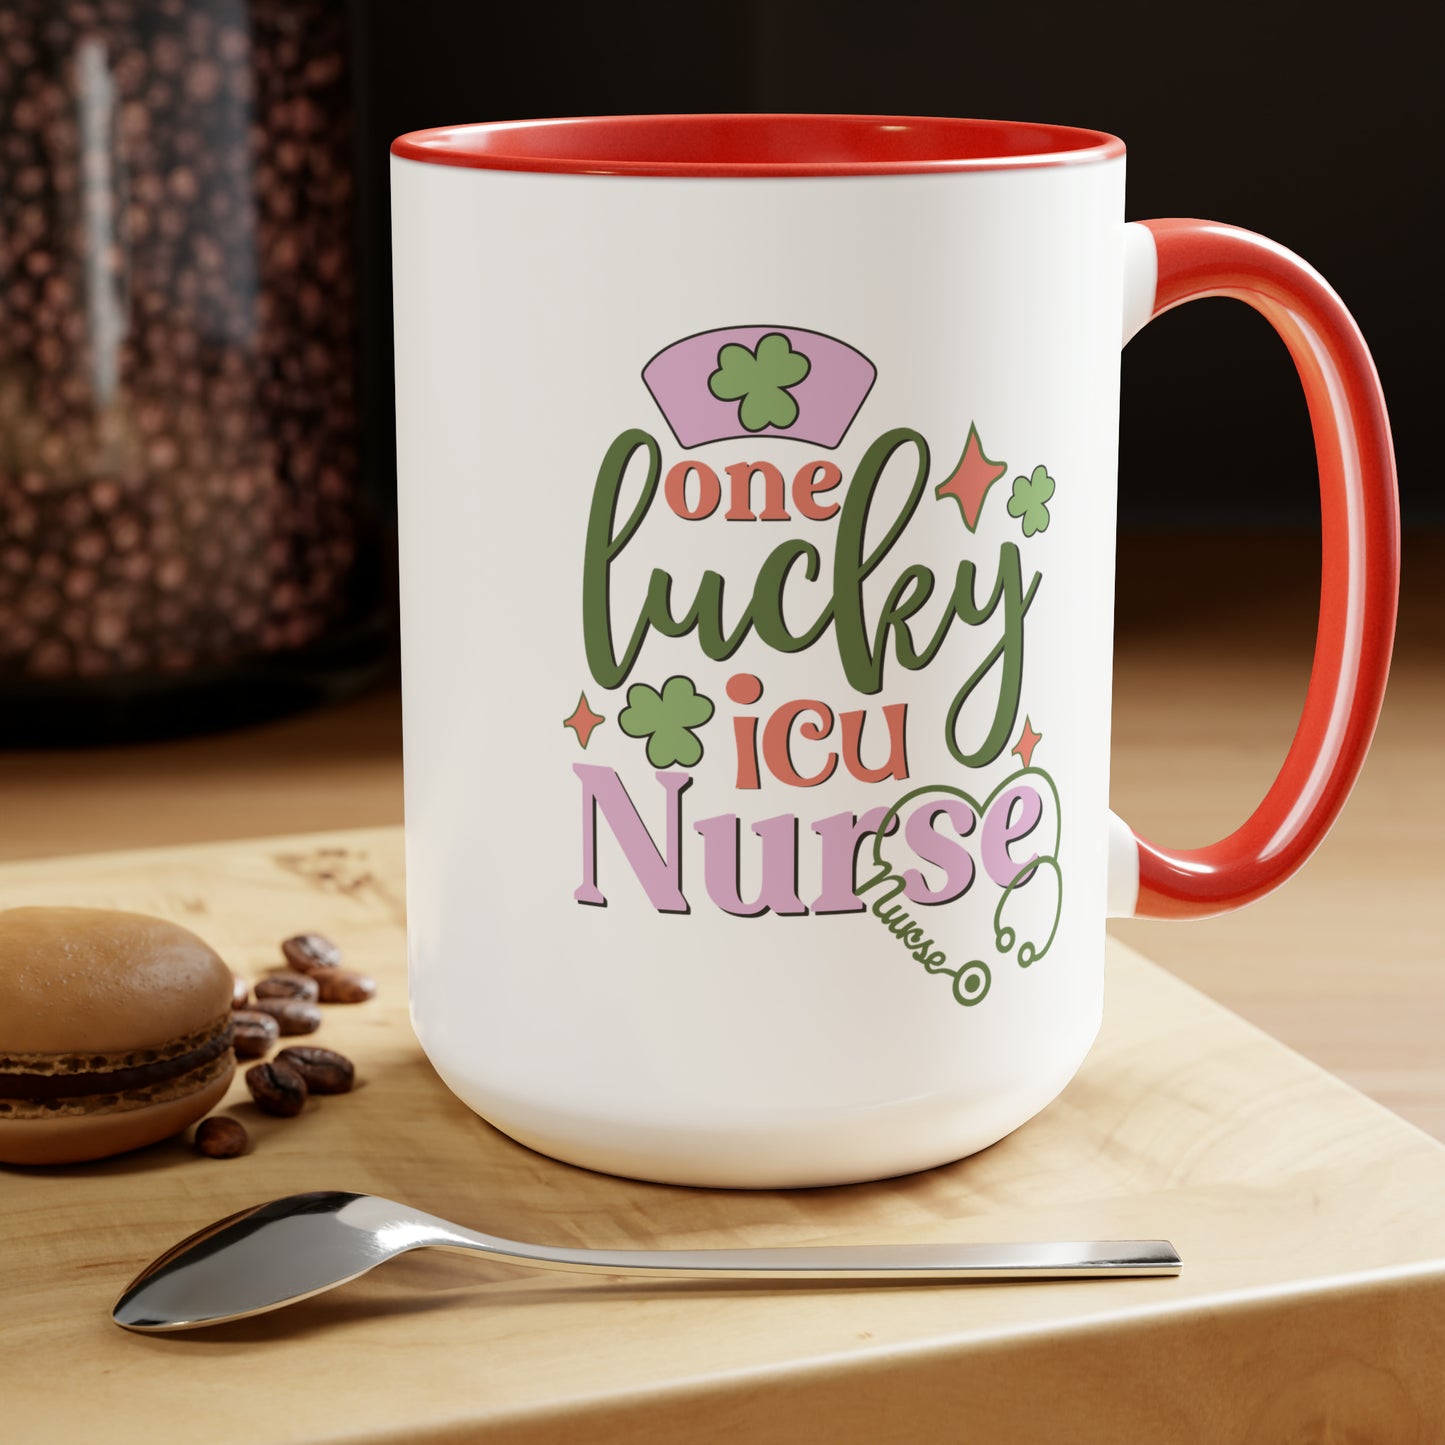 St Patrick's Day two-Tone Coffee Mugs, 15oz